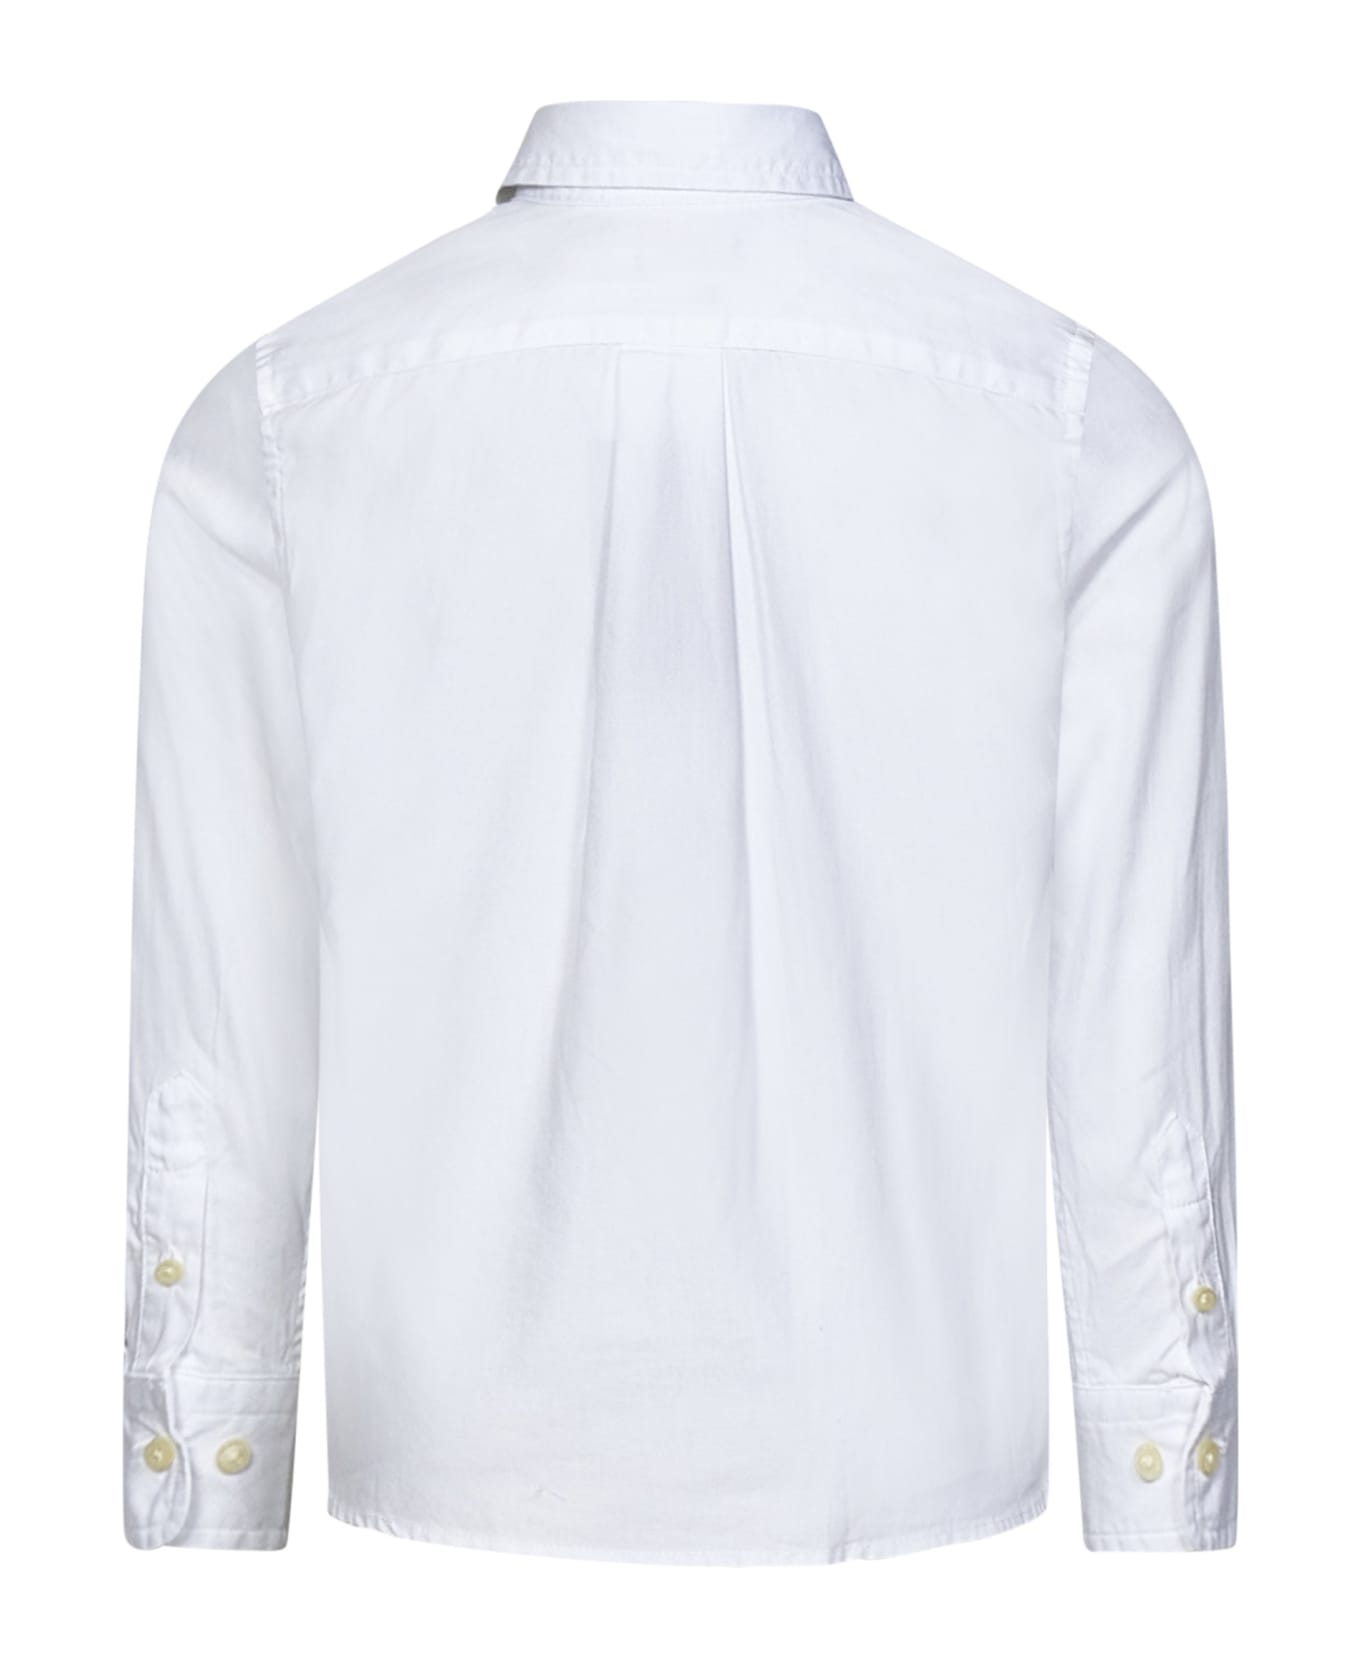 Polo Ralph Lauren Kids Shirt - White